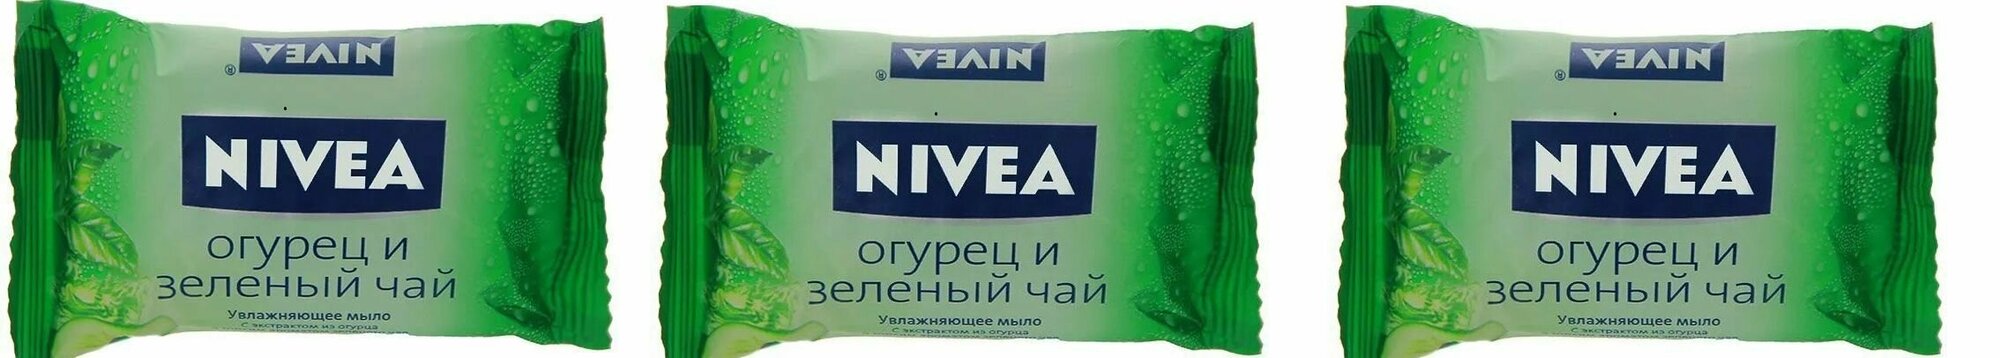 Nivea Мыло-уход Огурец-Зеленый Чай, 90 г, 3 шт